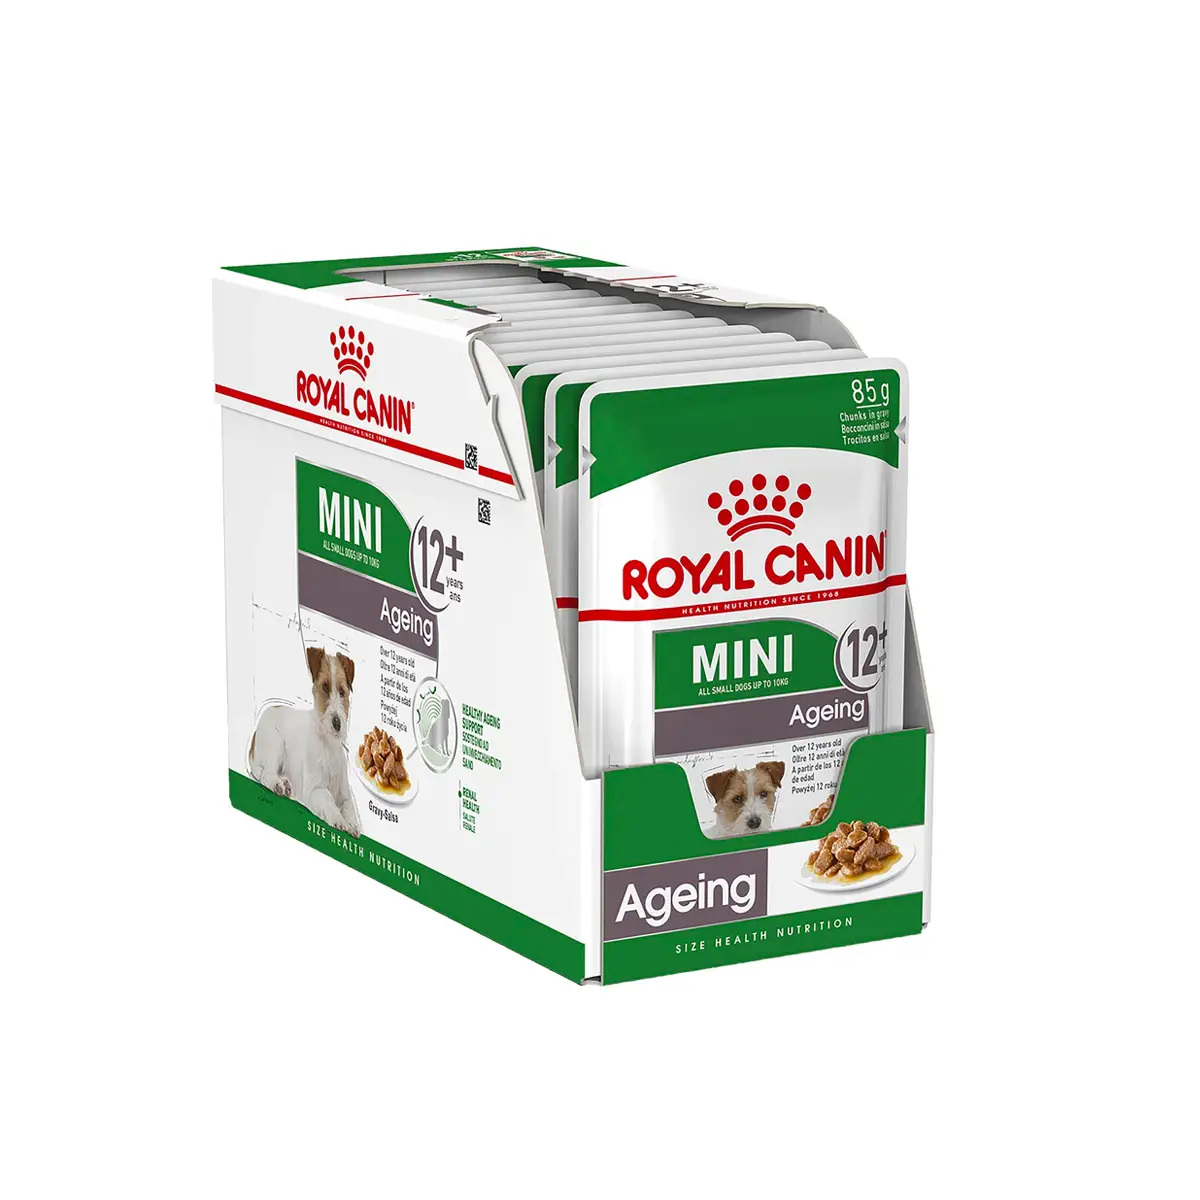 Royal Canin - Ageing 12+ Mini Dog Gravy Wet Food 85g